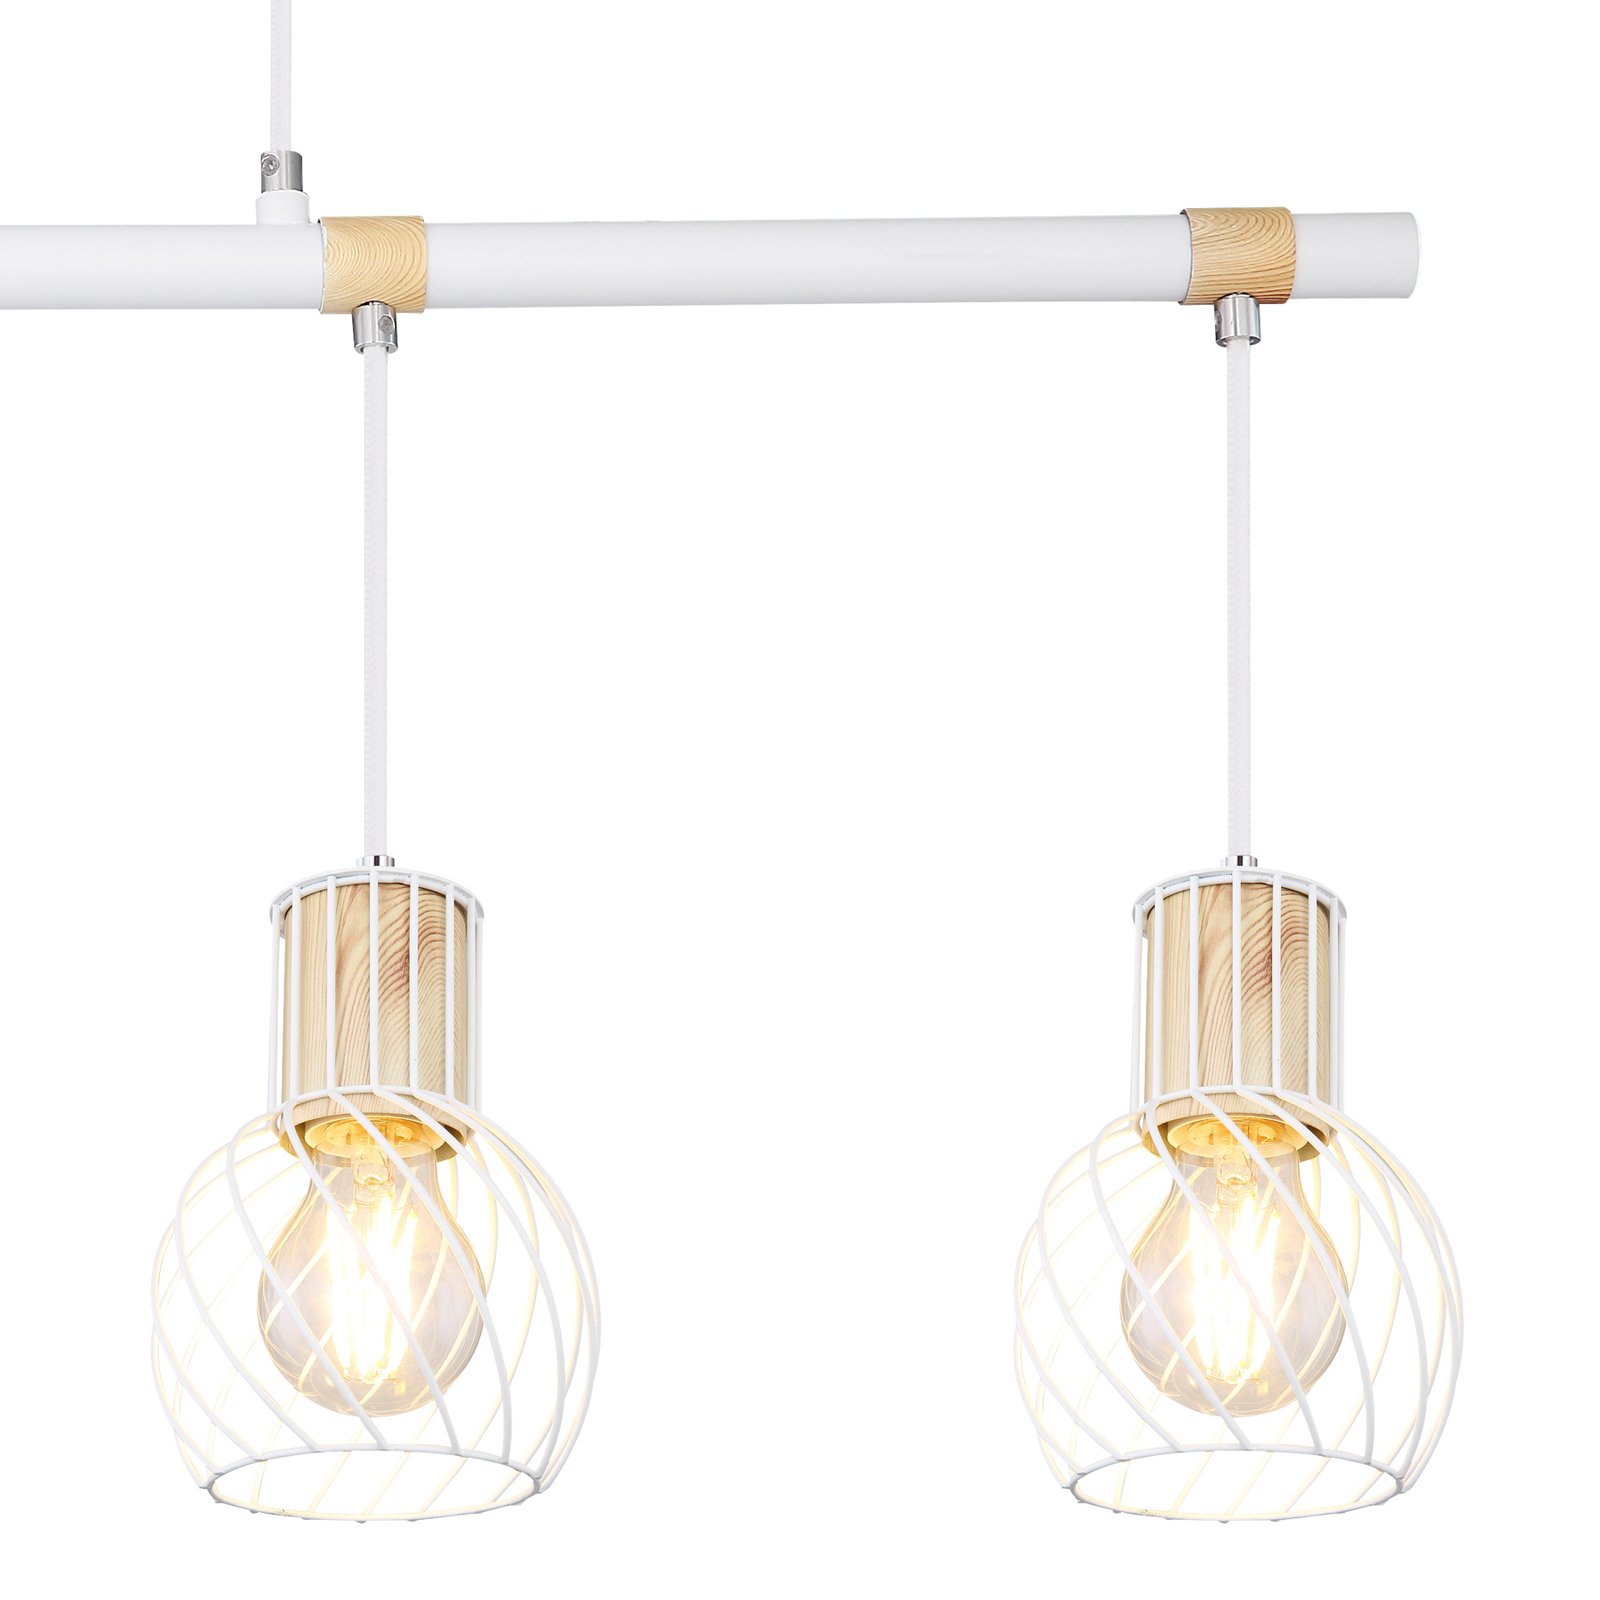 Luise pendant light, white, wooden look, 4-bulb